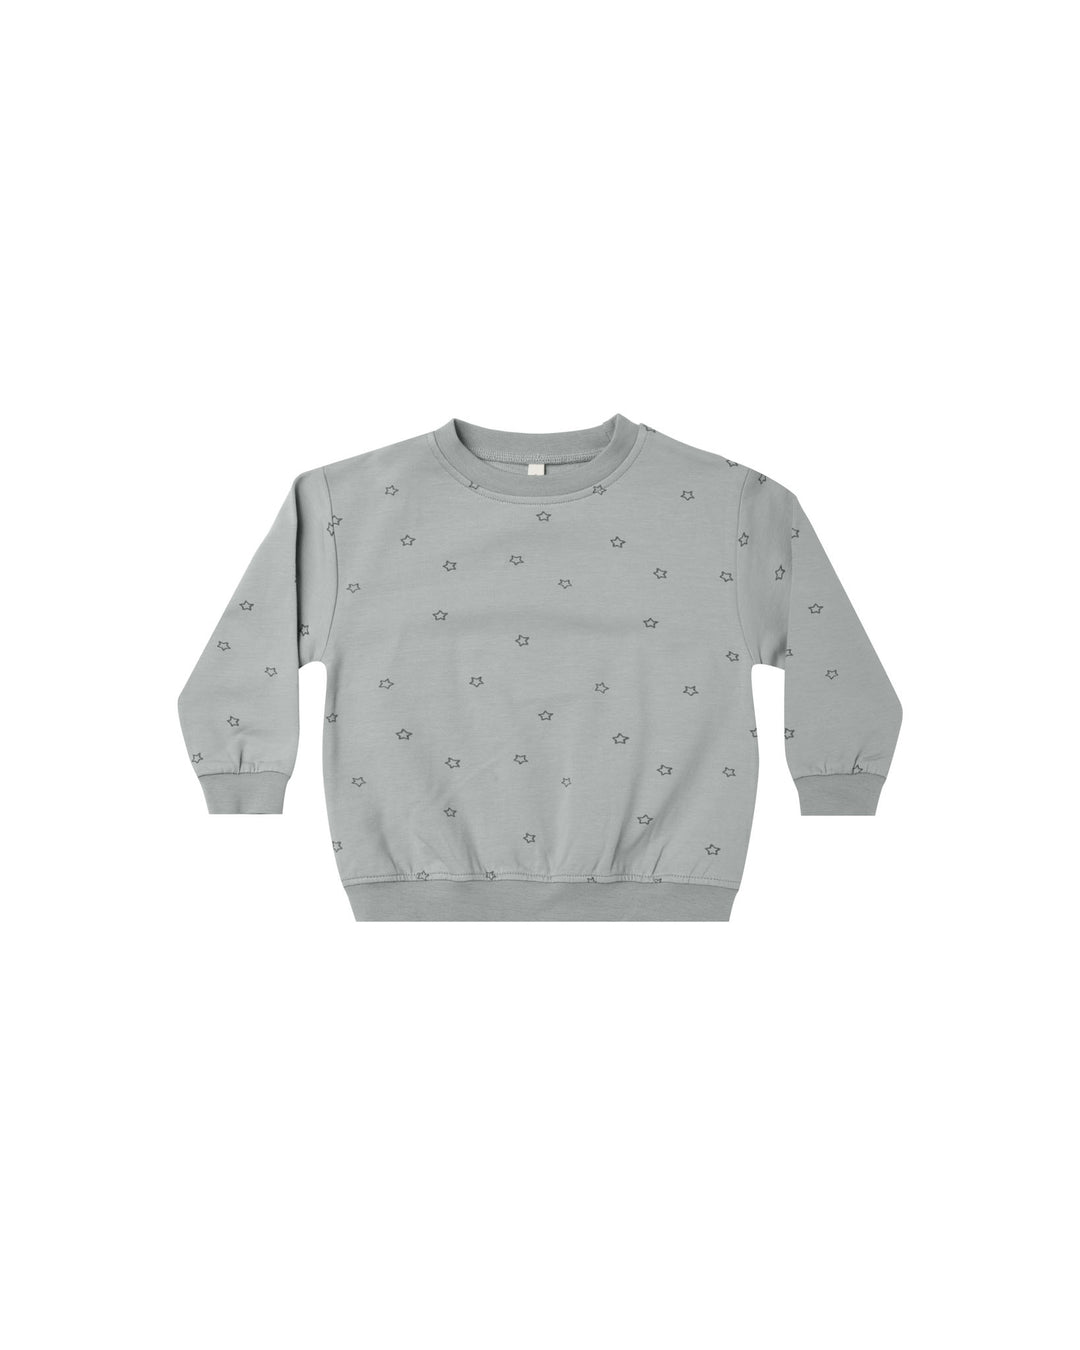 Quincy Mae Stars Sweatshirt, Dusty Blue |Mockingbird Baby & Kids